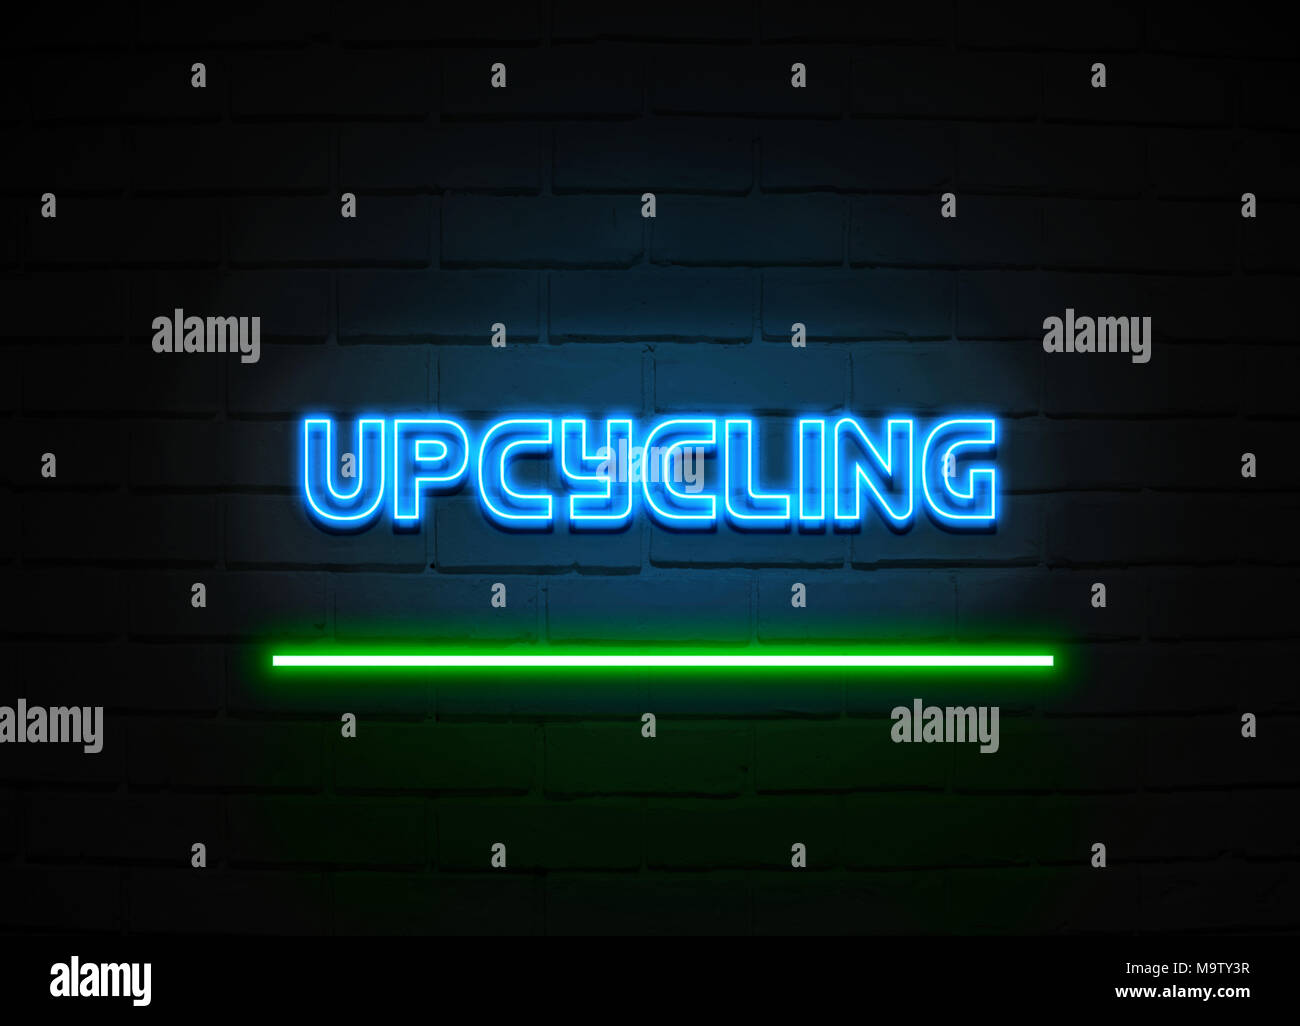 Upcycling Leuchtreklame - glühende Leuchtreklame auf brickwall Wand - 3D-Royalty Free Stock Illustration dargestellt. Stockfoto